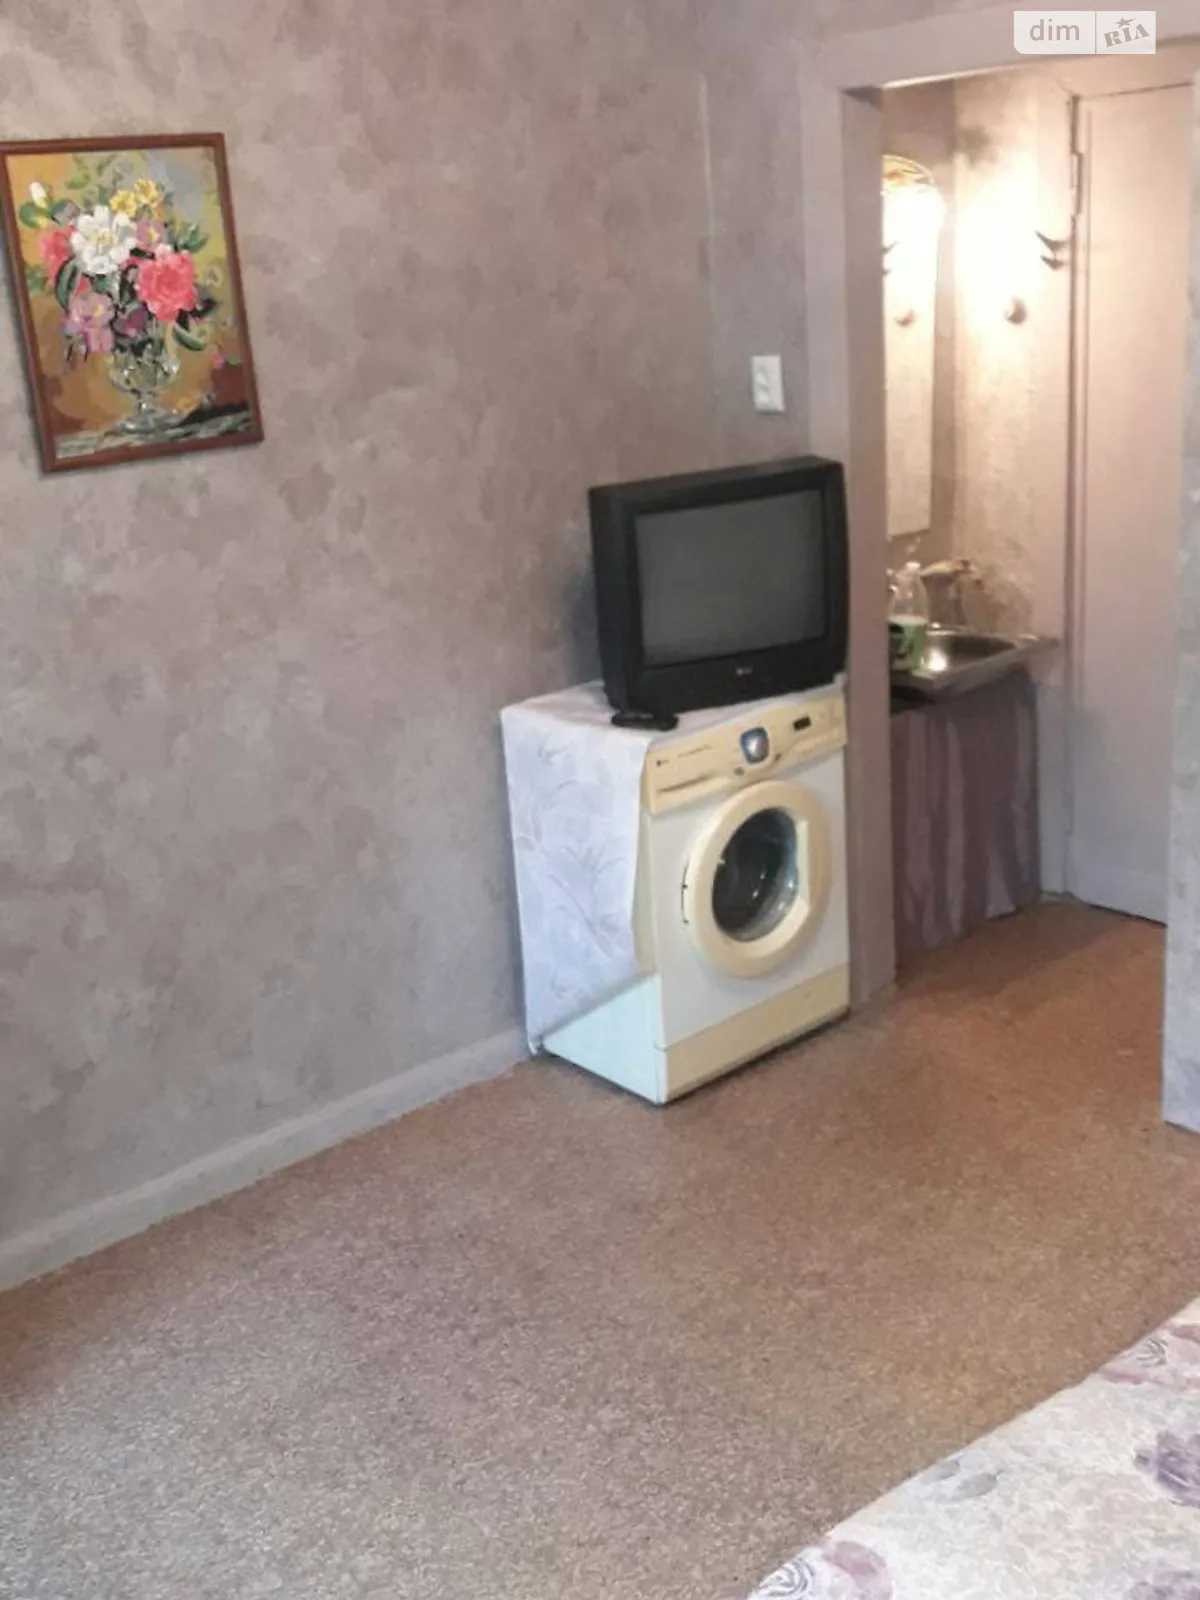 Продается комната 12 кв. м в Одессе, цена: 8500 $ - фото 1